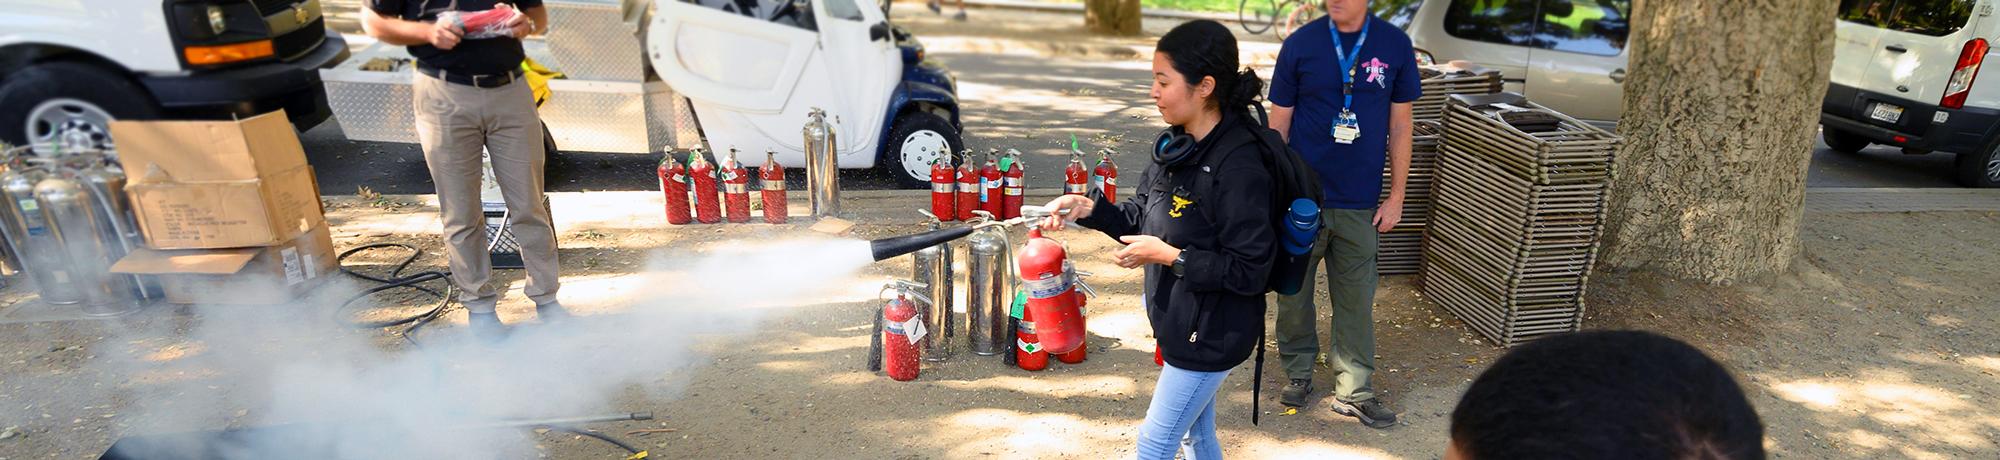 Photo of fire extinguisher training.